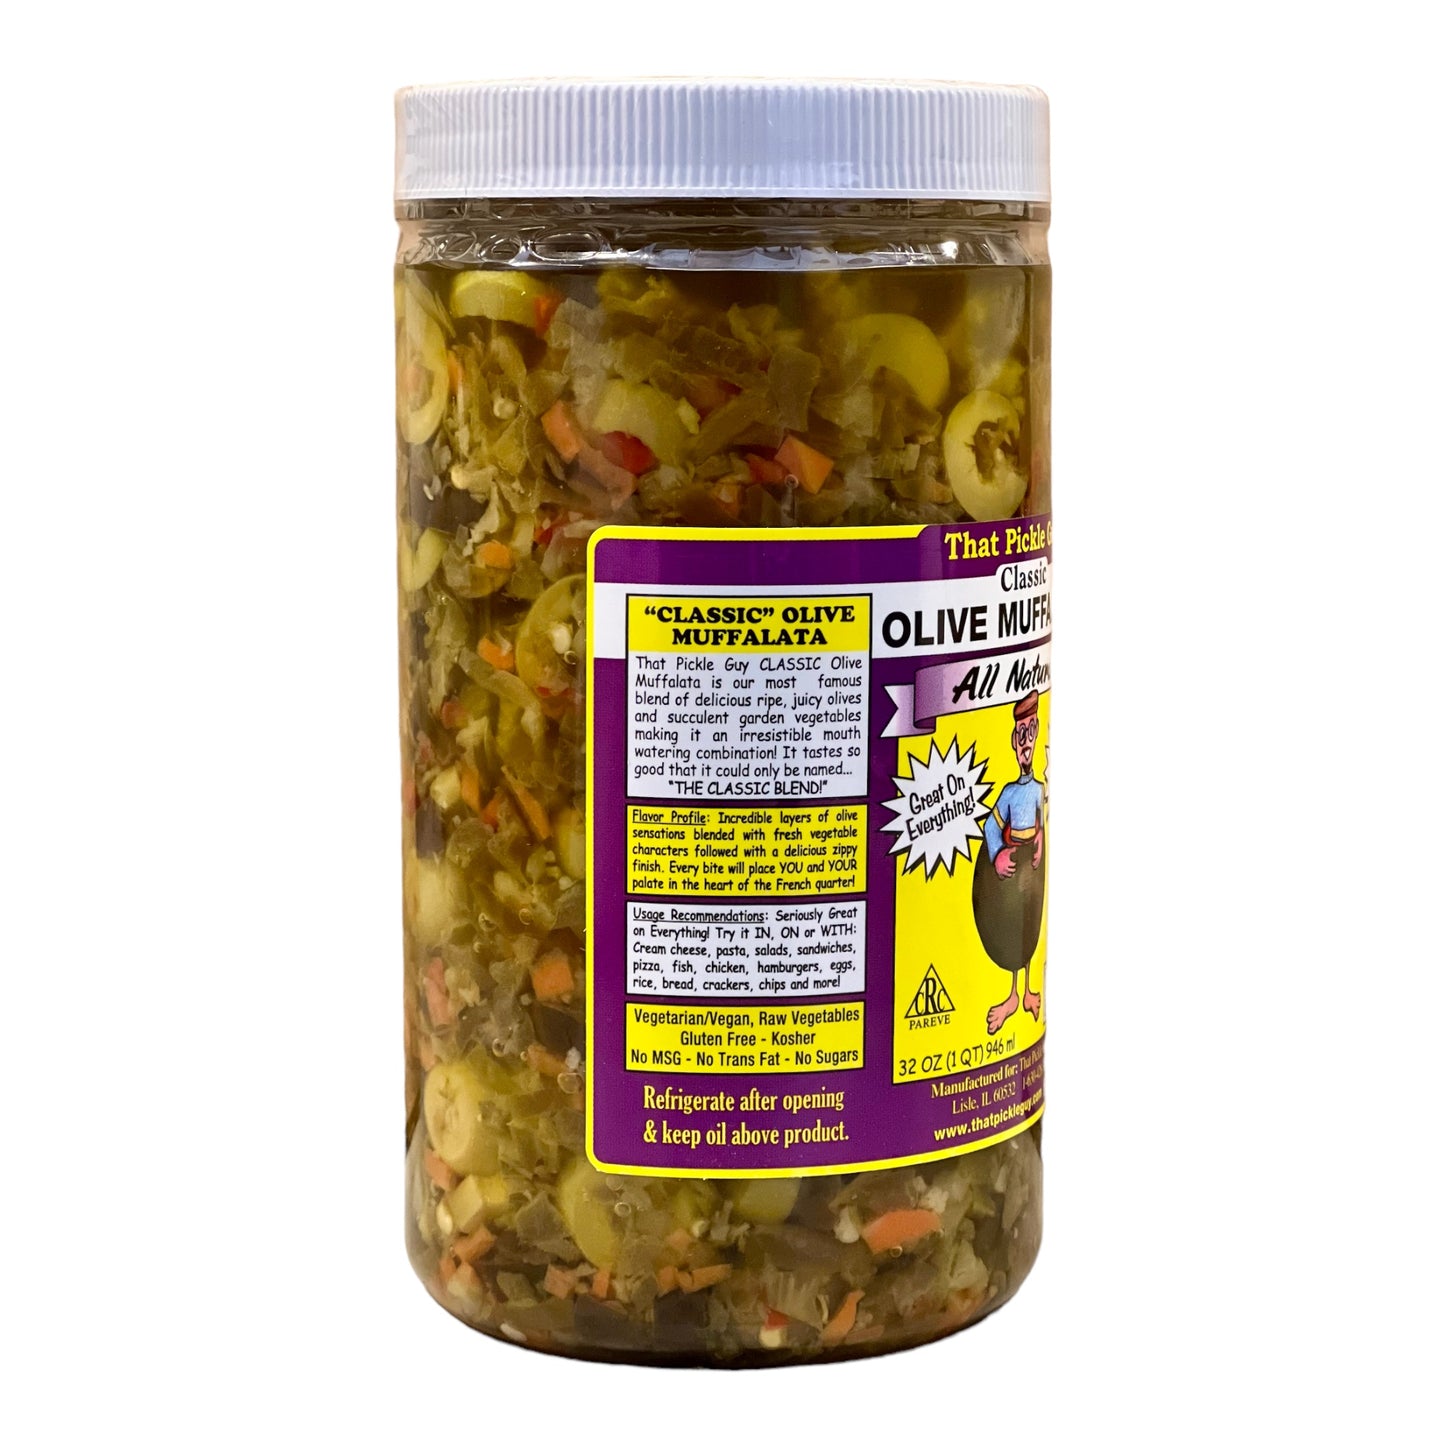 That Pickle Guy Classic Olive Muffalata – 32 oz